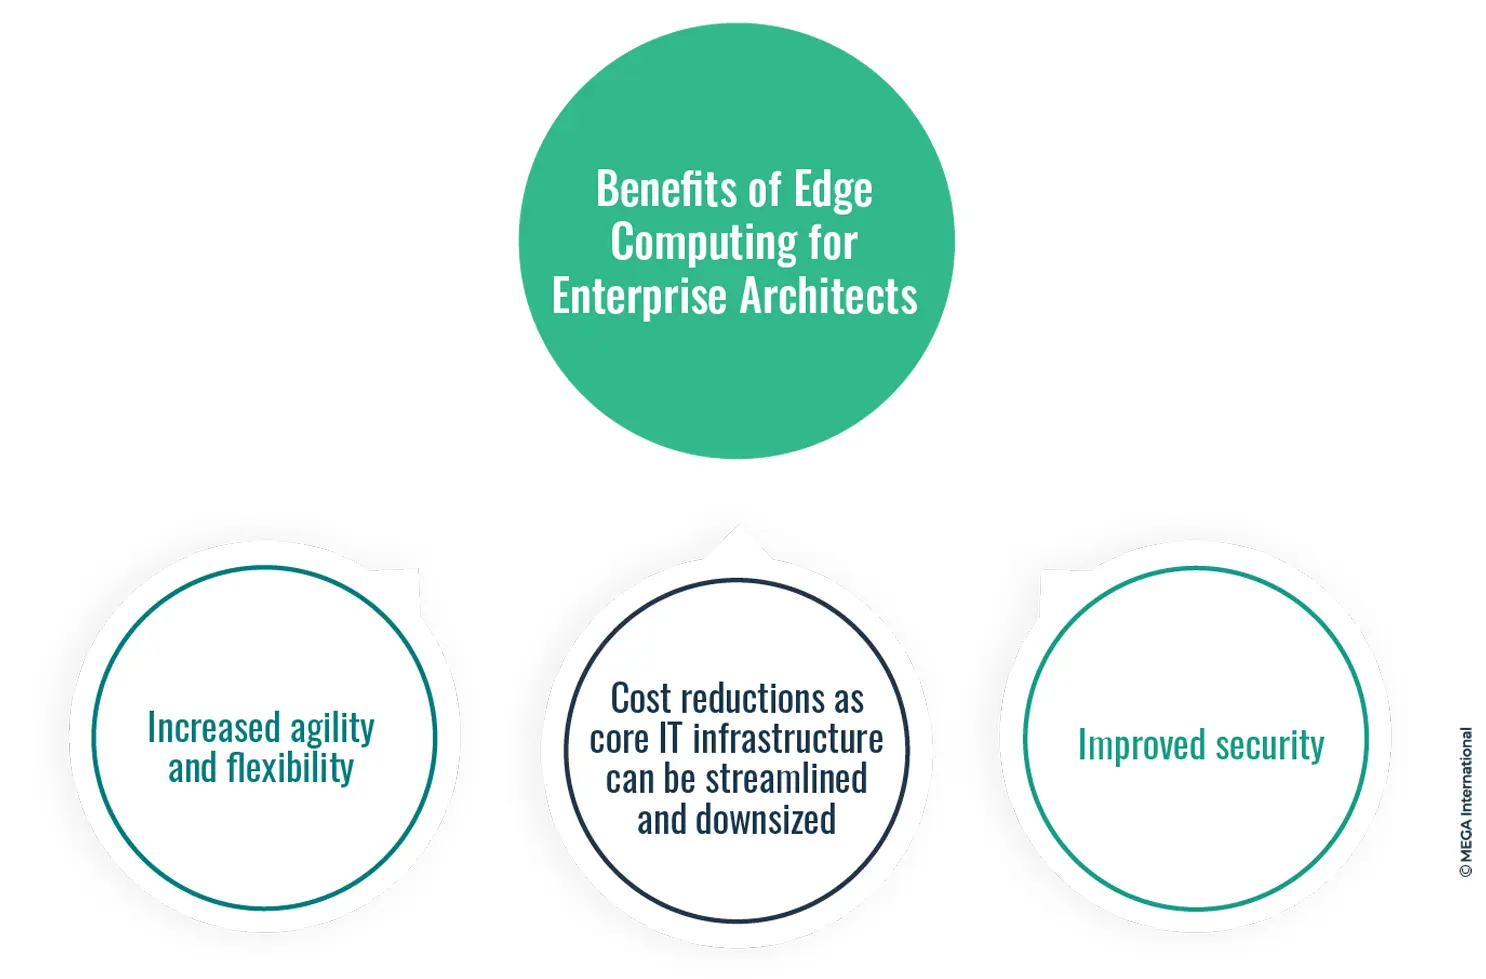 Benefits of Edge Computing for Enterprise Architects